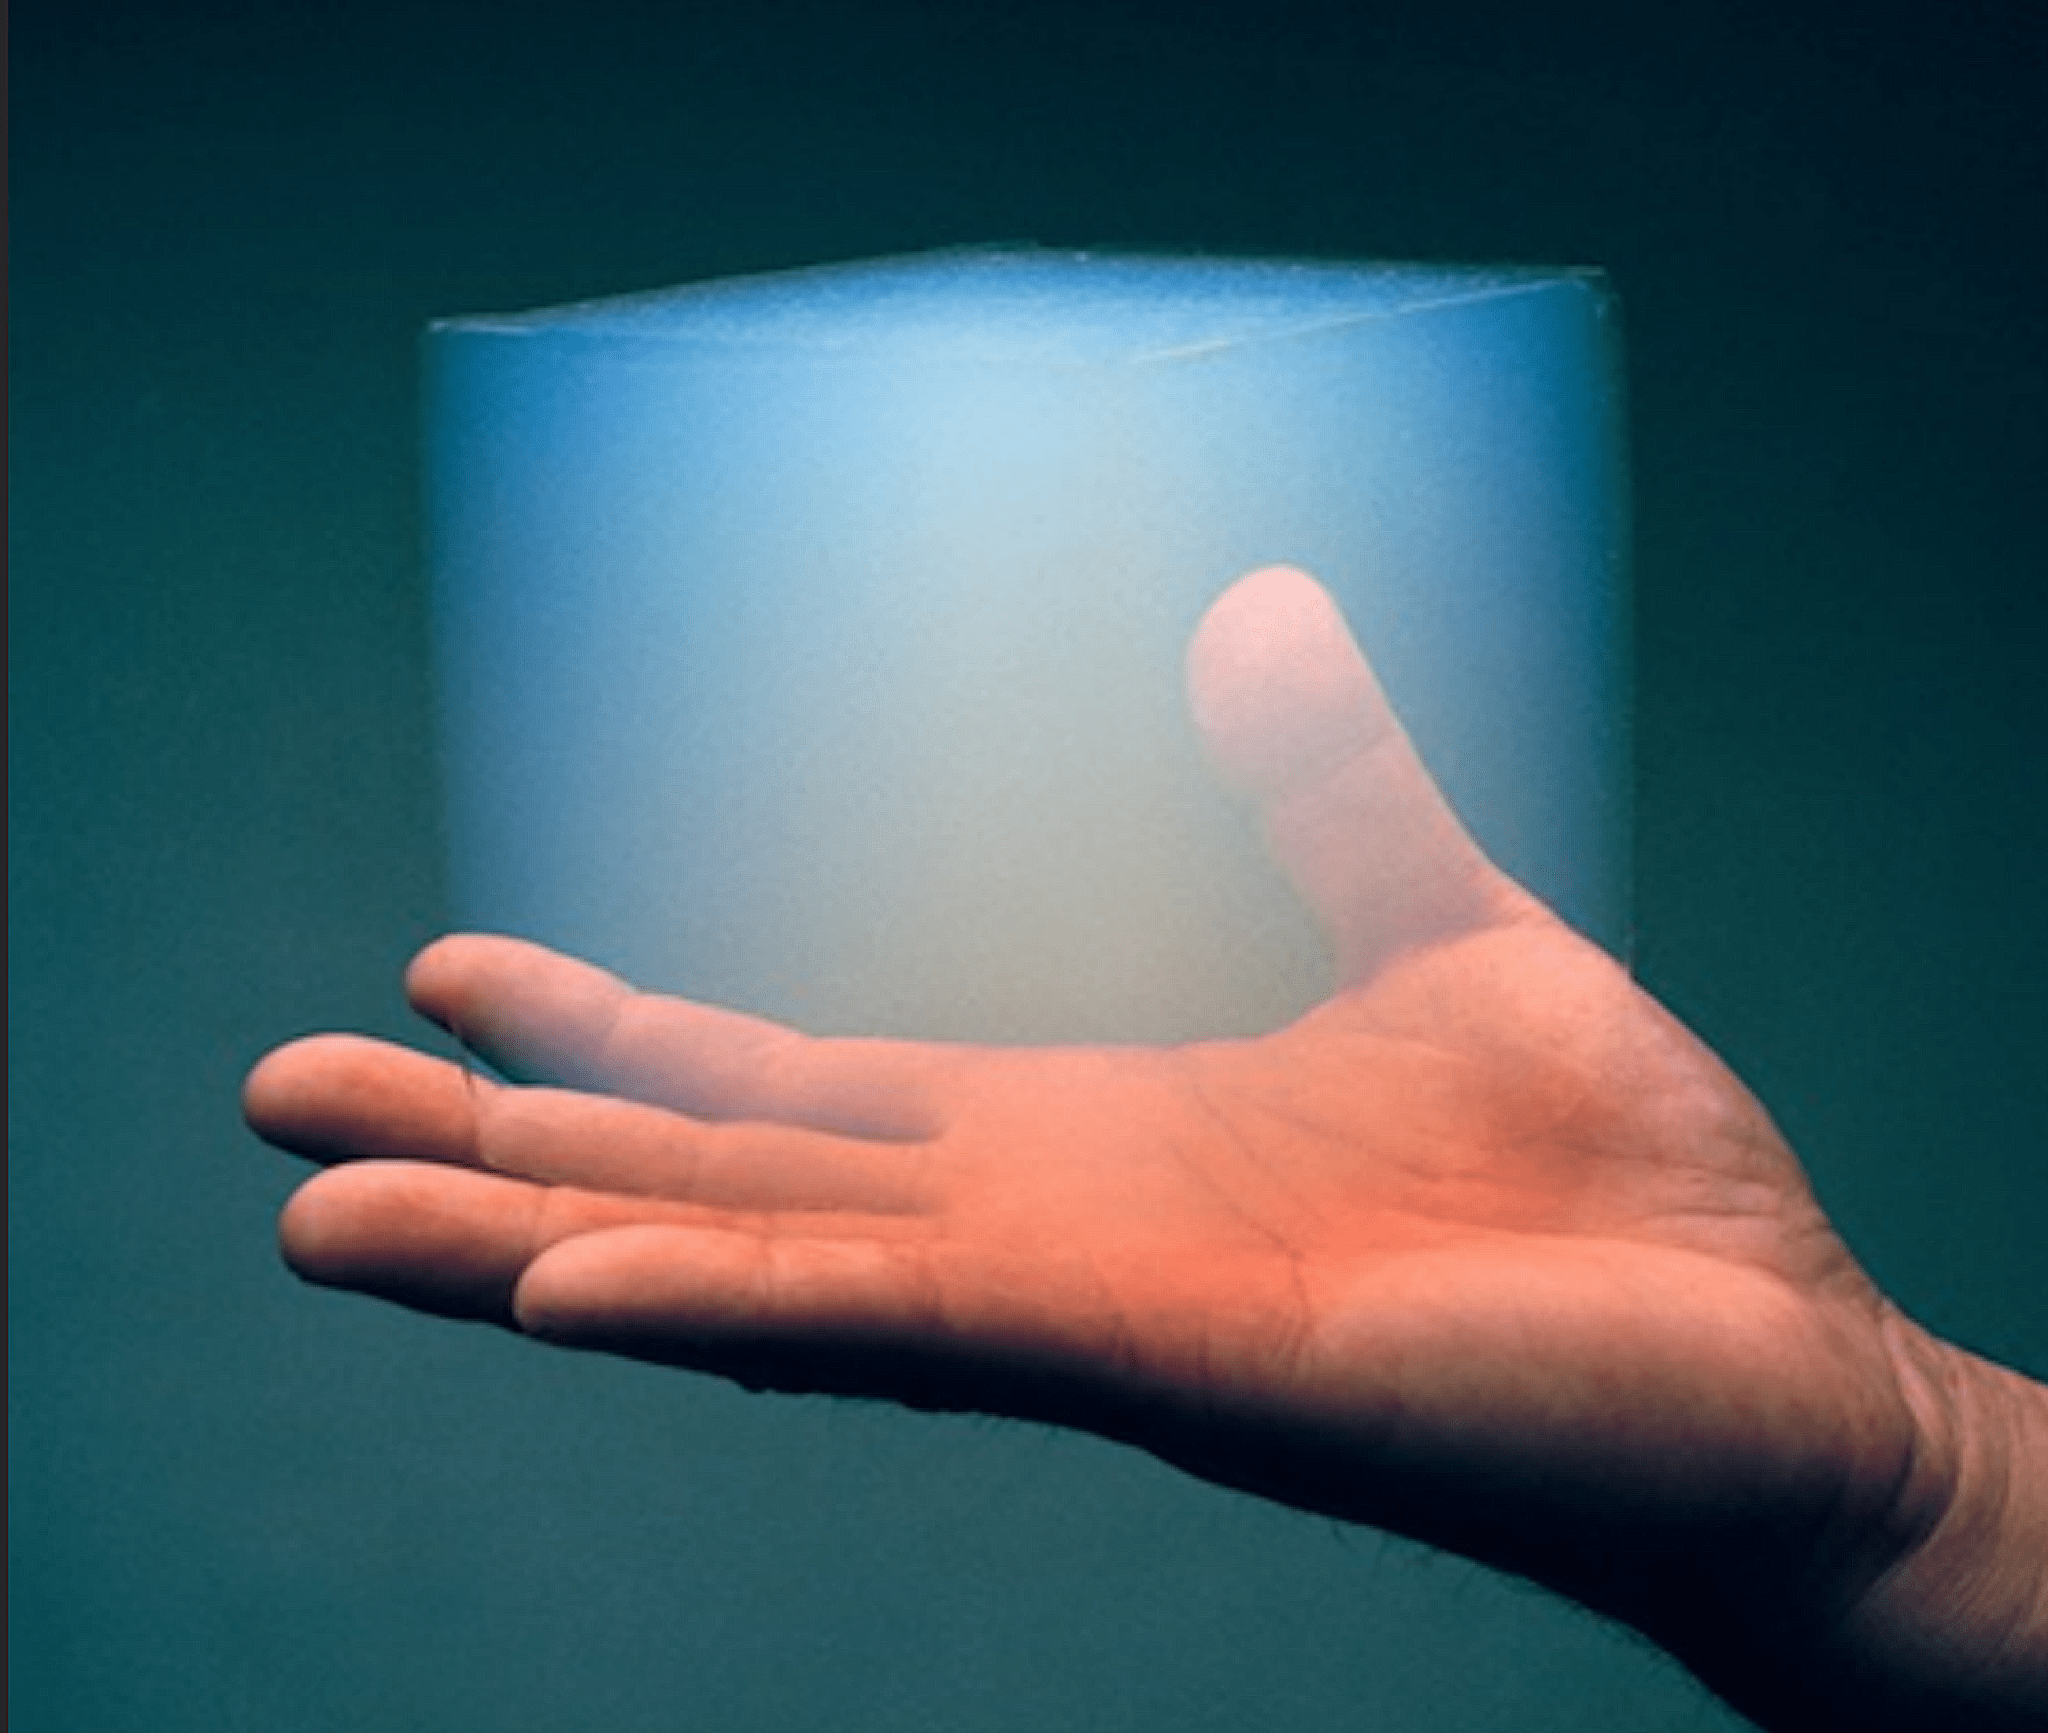 Blue light shining onto a human hand.